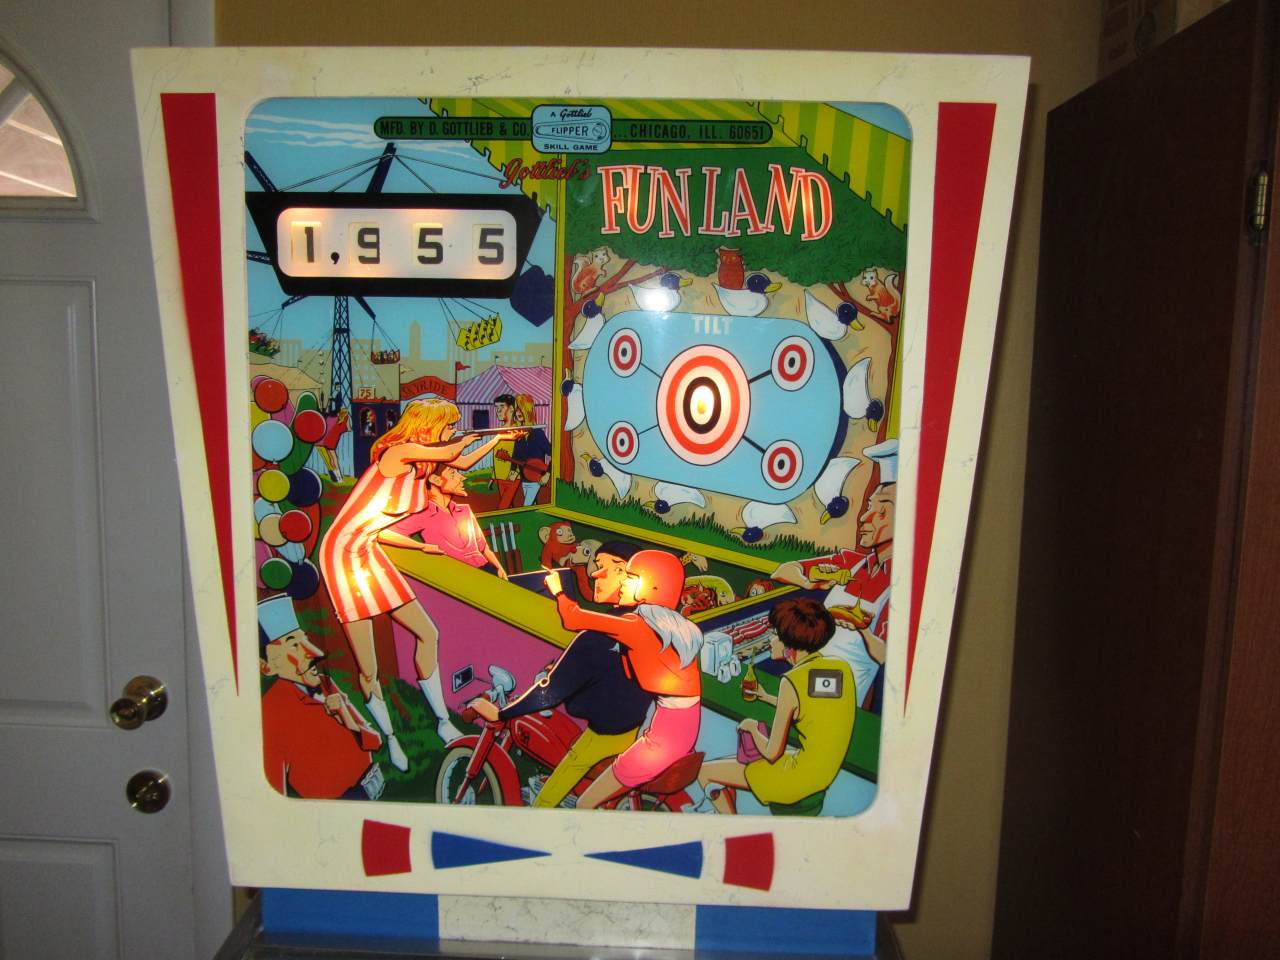 For Sale: Gottlieb FUN LAND pinball machine (SOLD) | Pinball machines ...